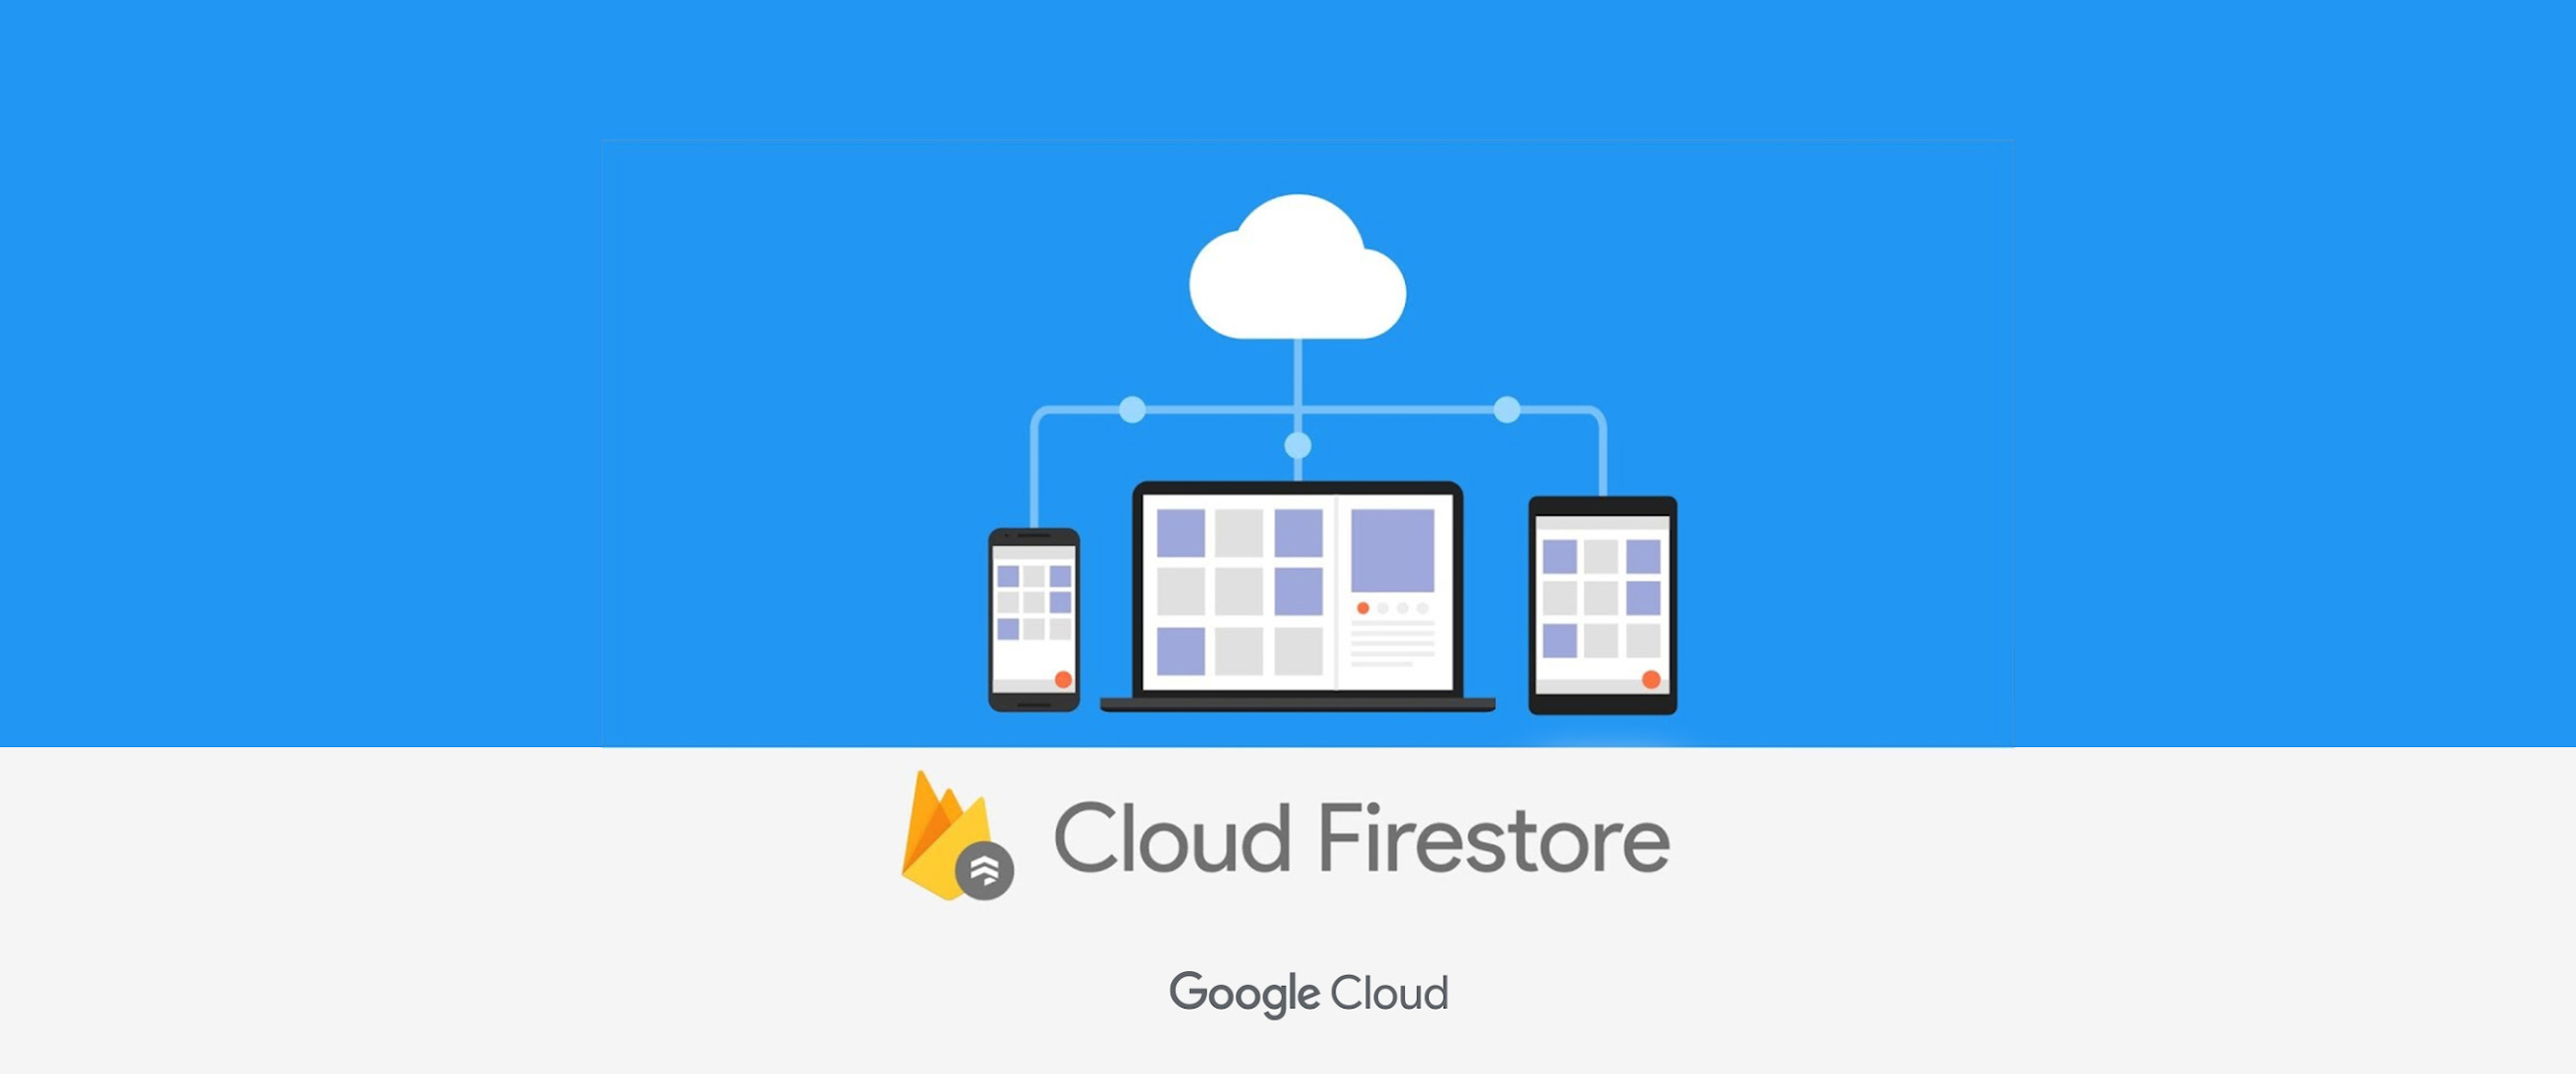 https://storage.googleapis.com/gweb-cloudblog-publish/images/cloud_firestore.max-2600x2600.jpg